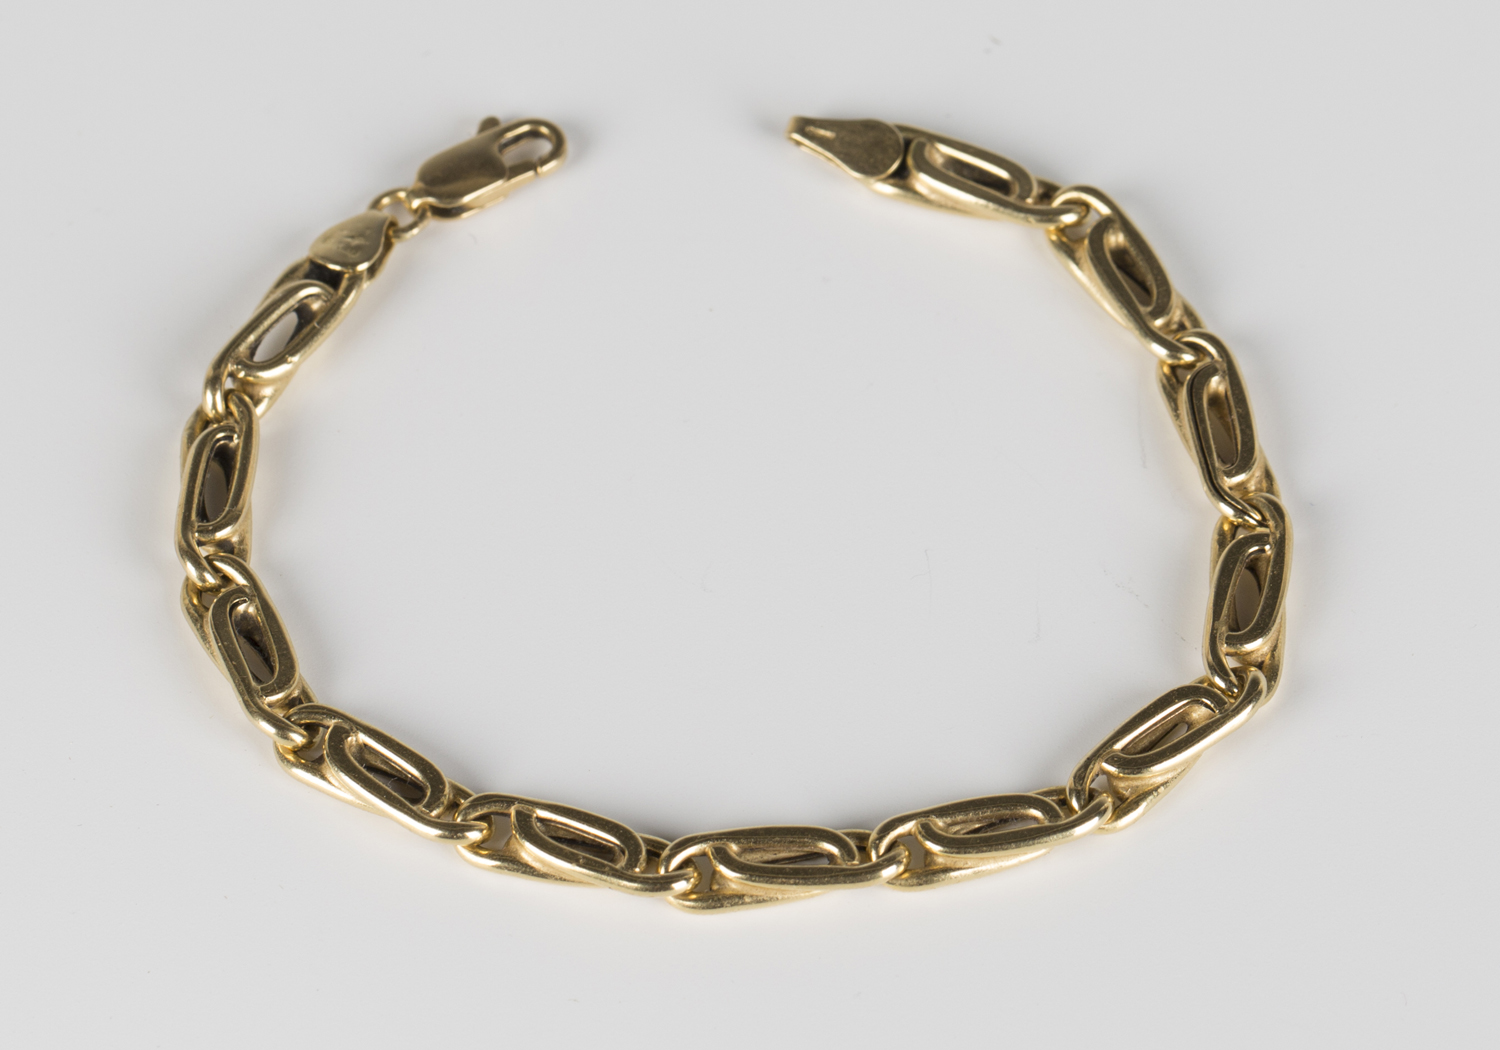 An 18ct gold multiple link bracelet on a sprung hook shaped clasp, detailed '750', length 18cm.